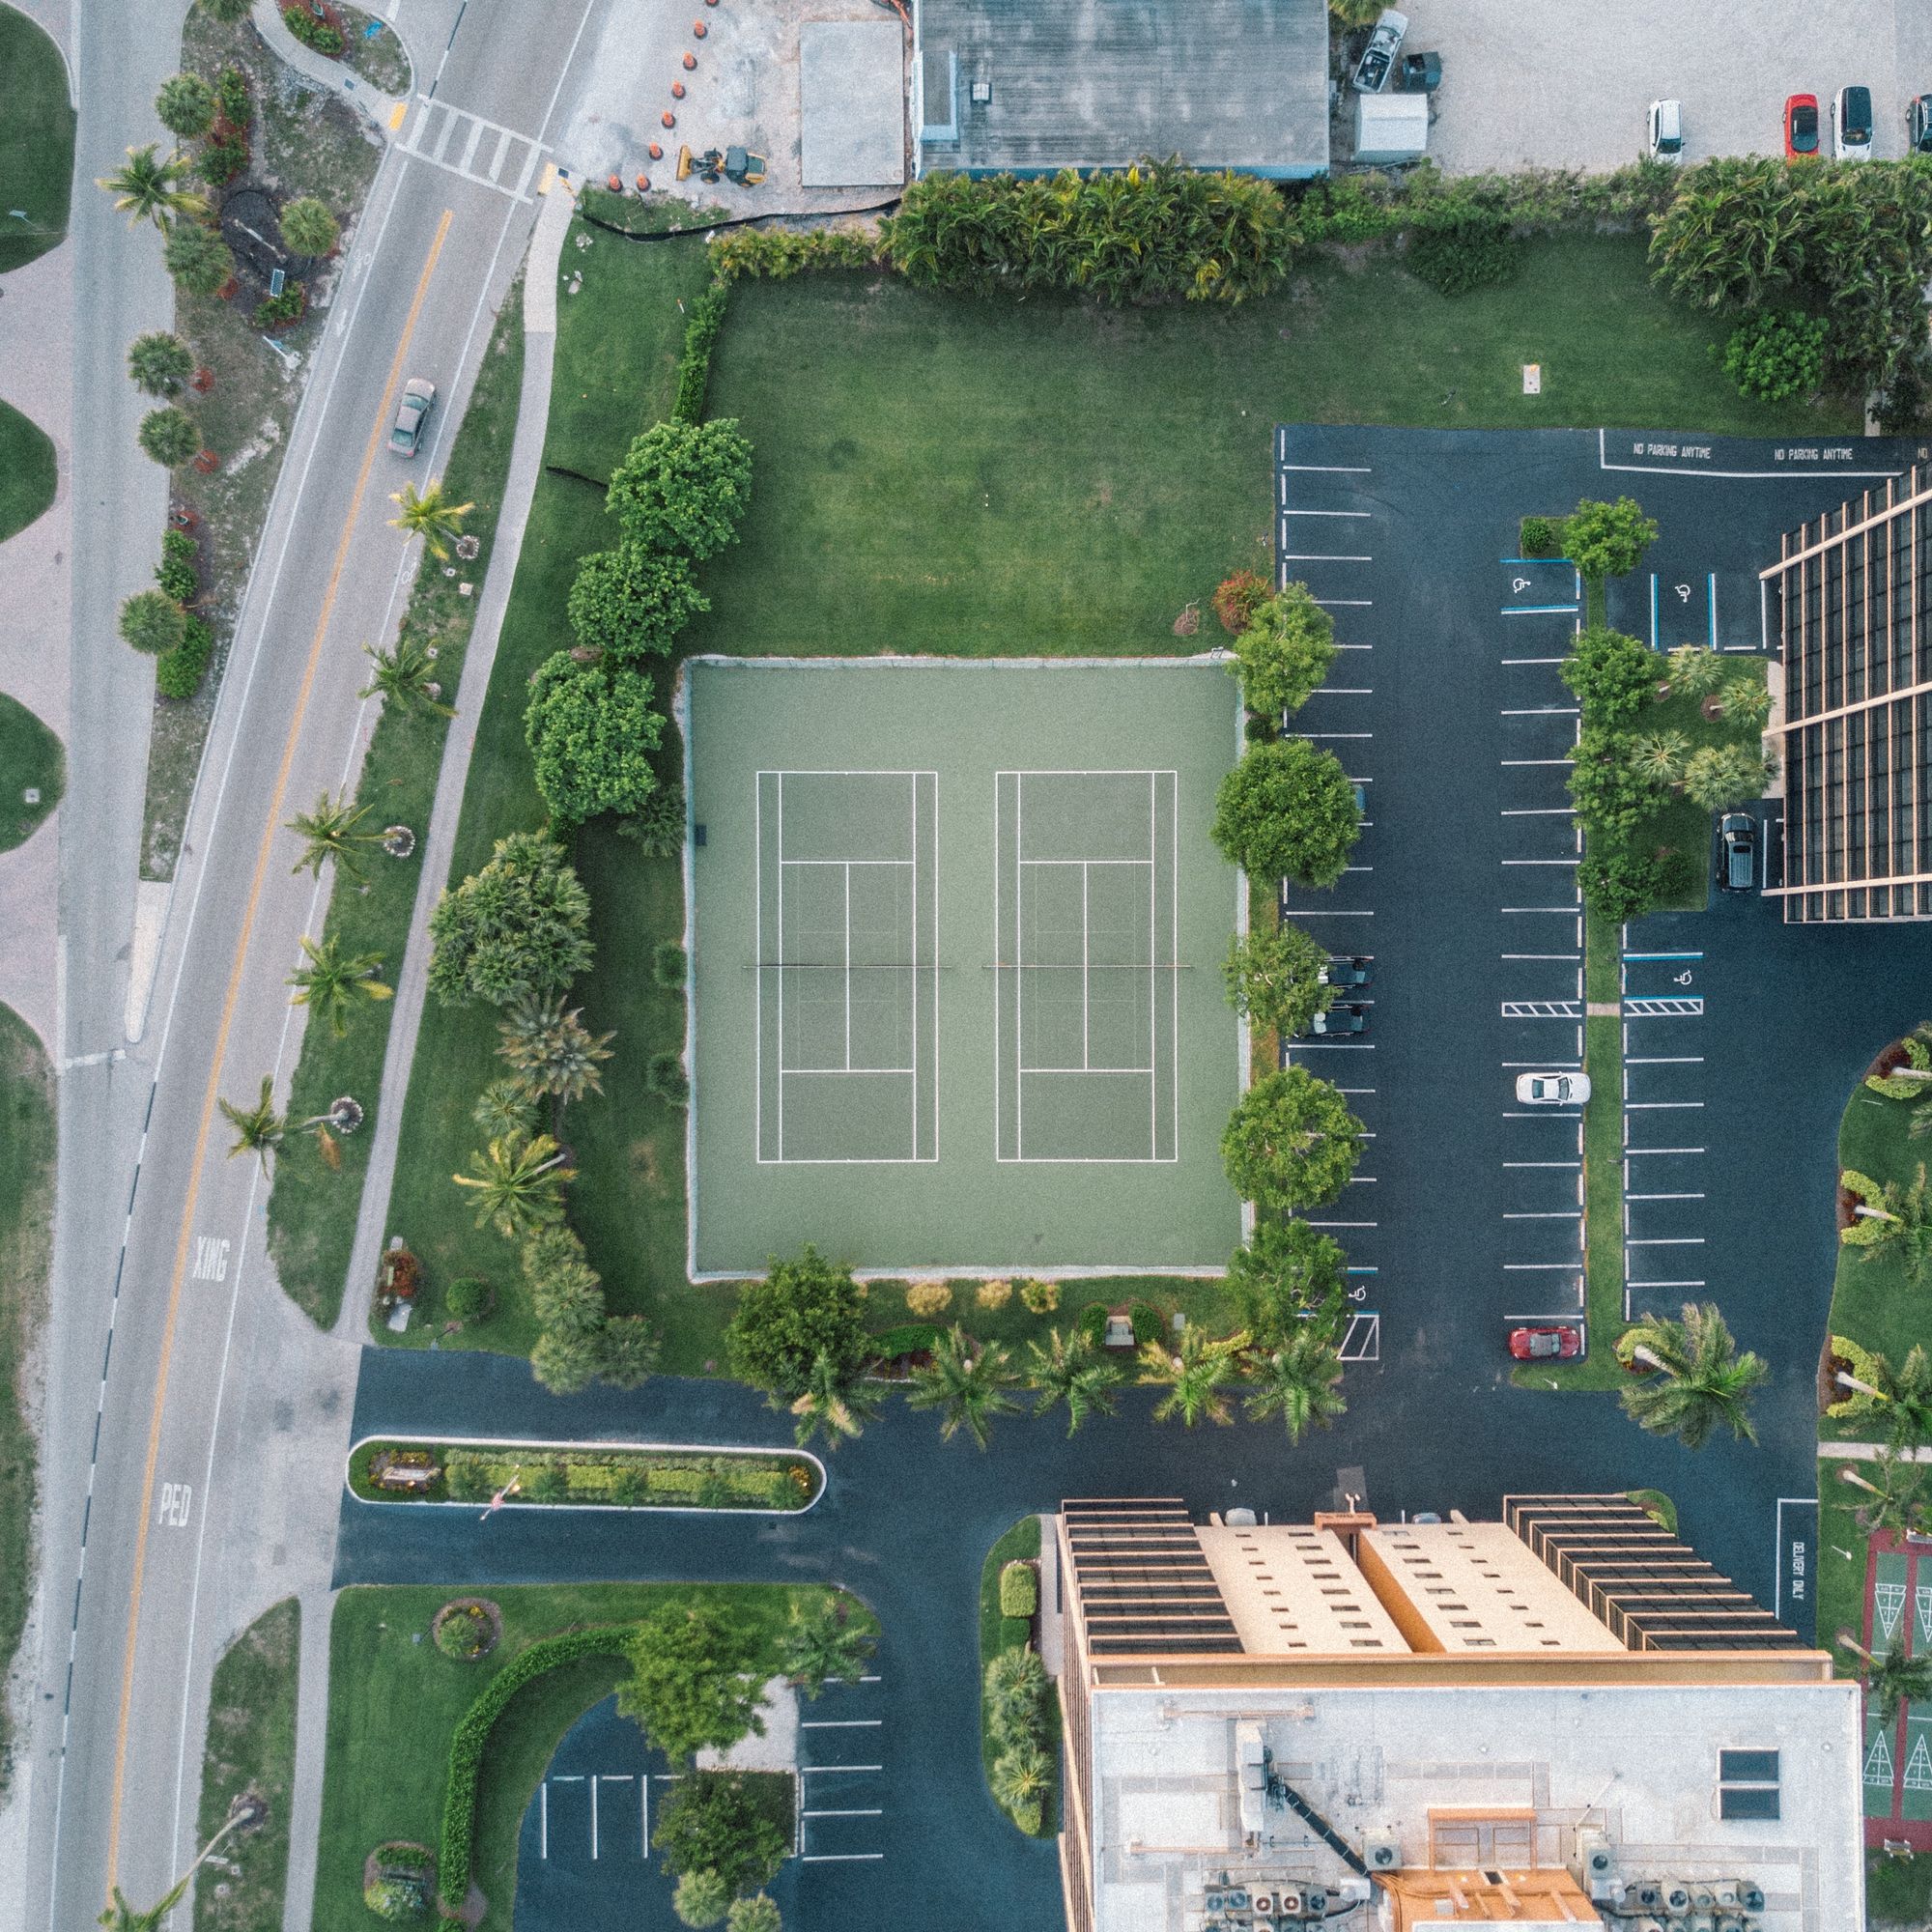 Aerial view of corporate landscaped areas - Josh Sorenson, Pexels